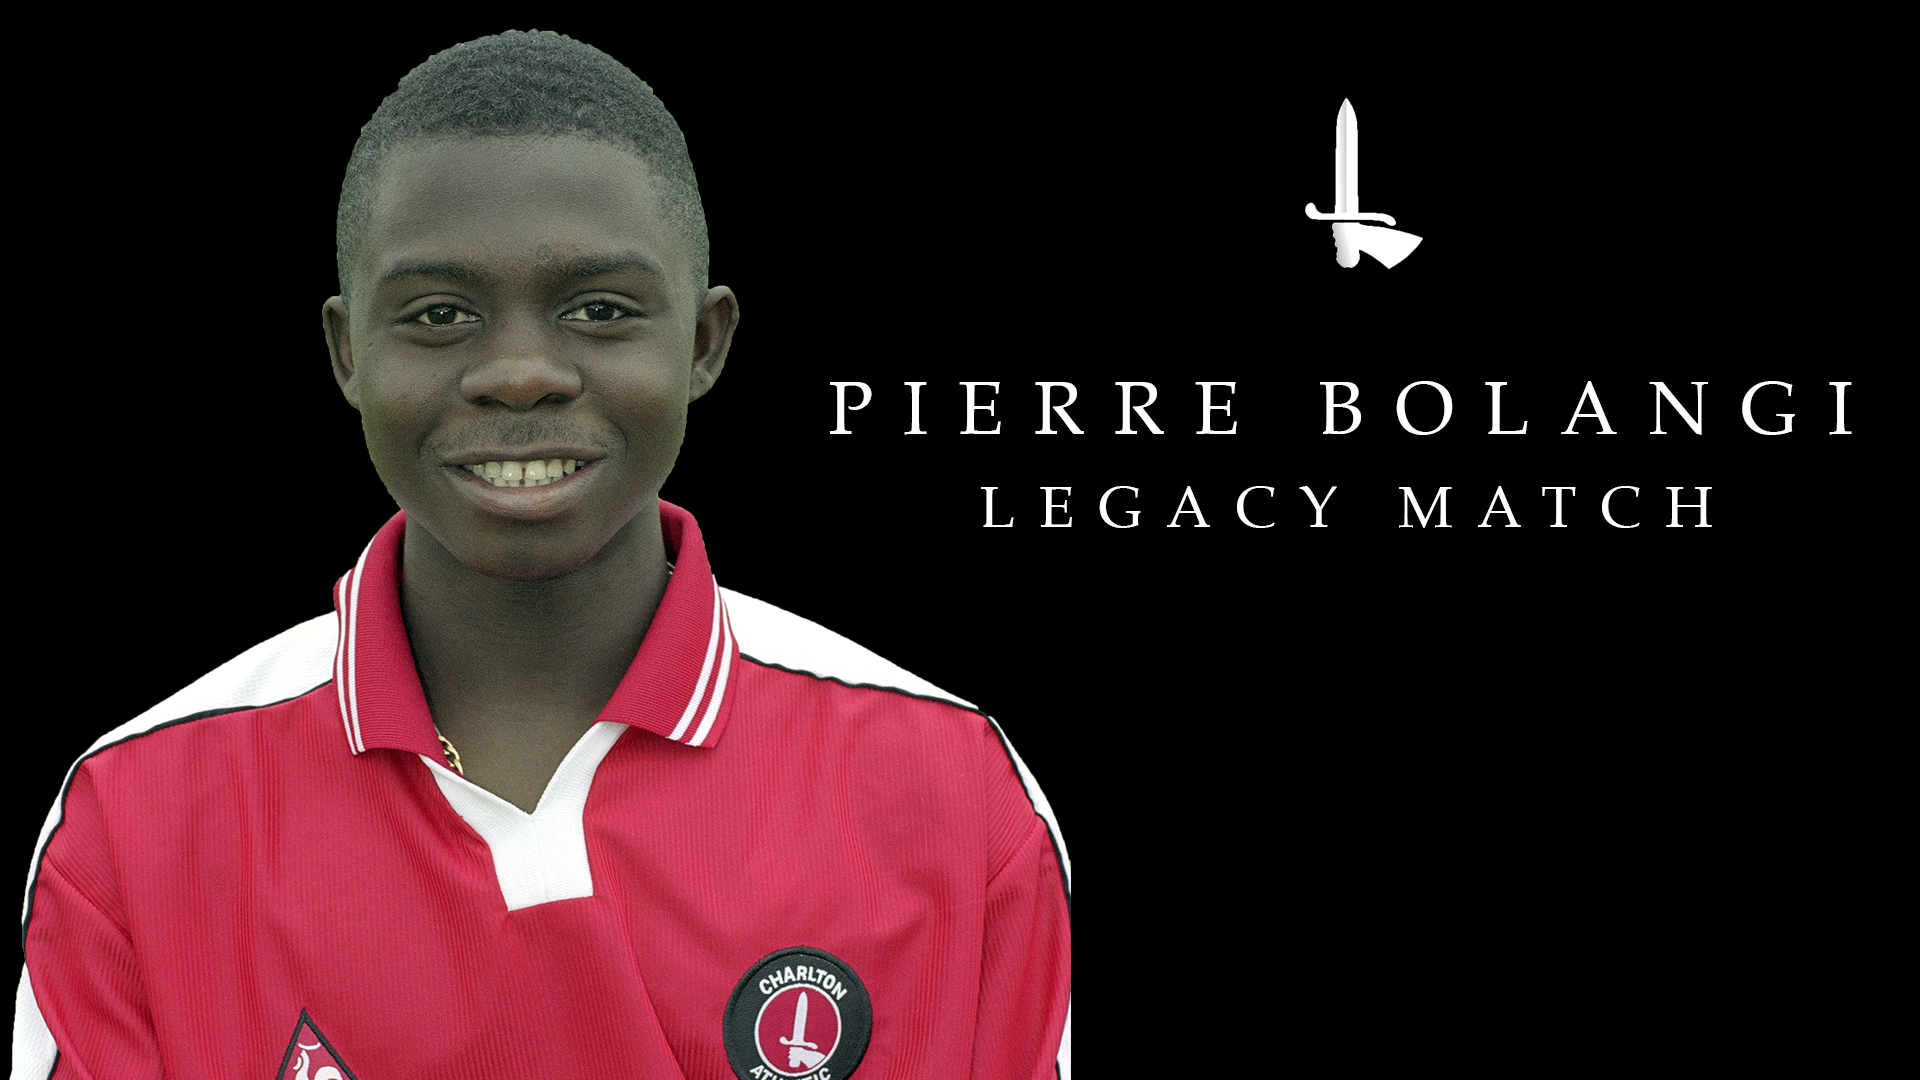 Pierre Bolangi legacy